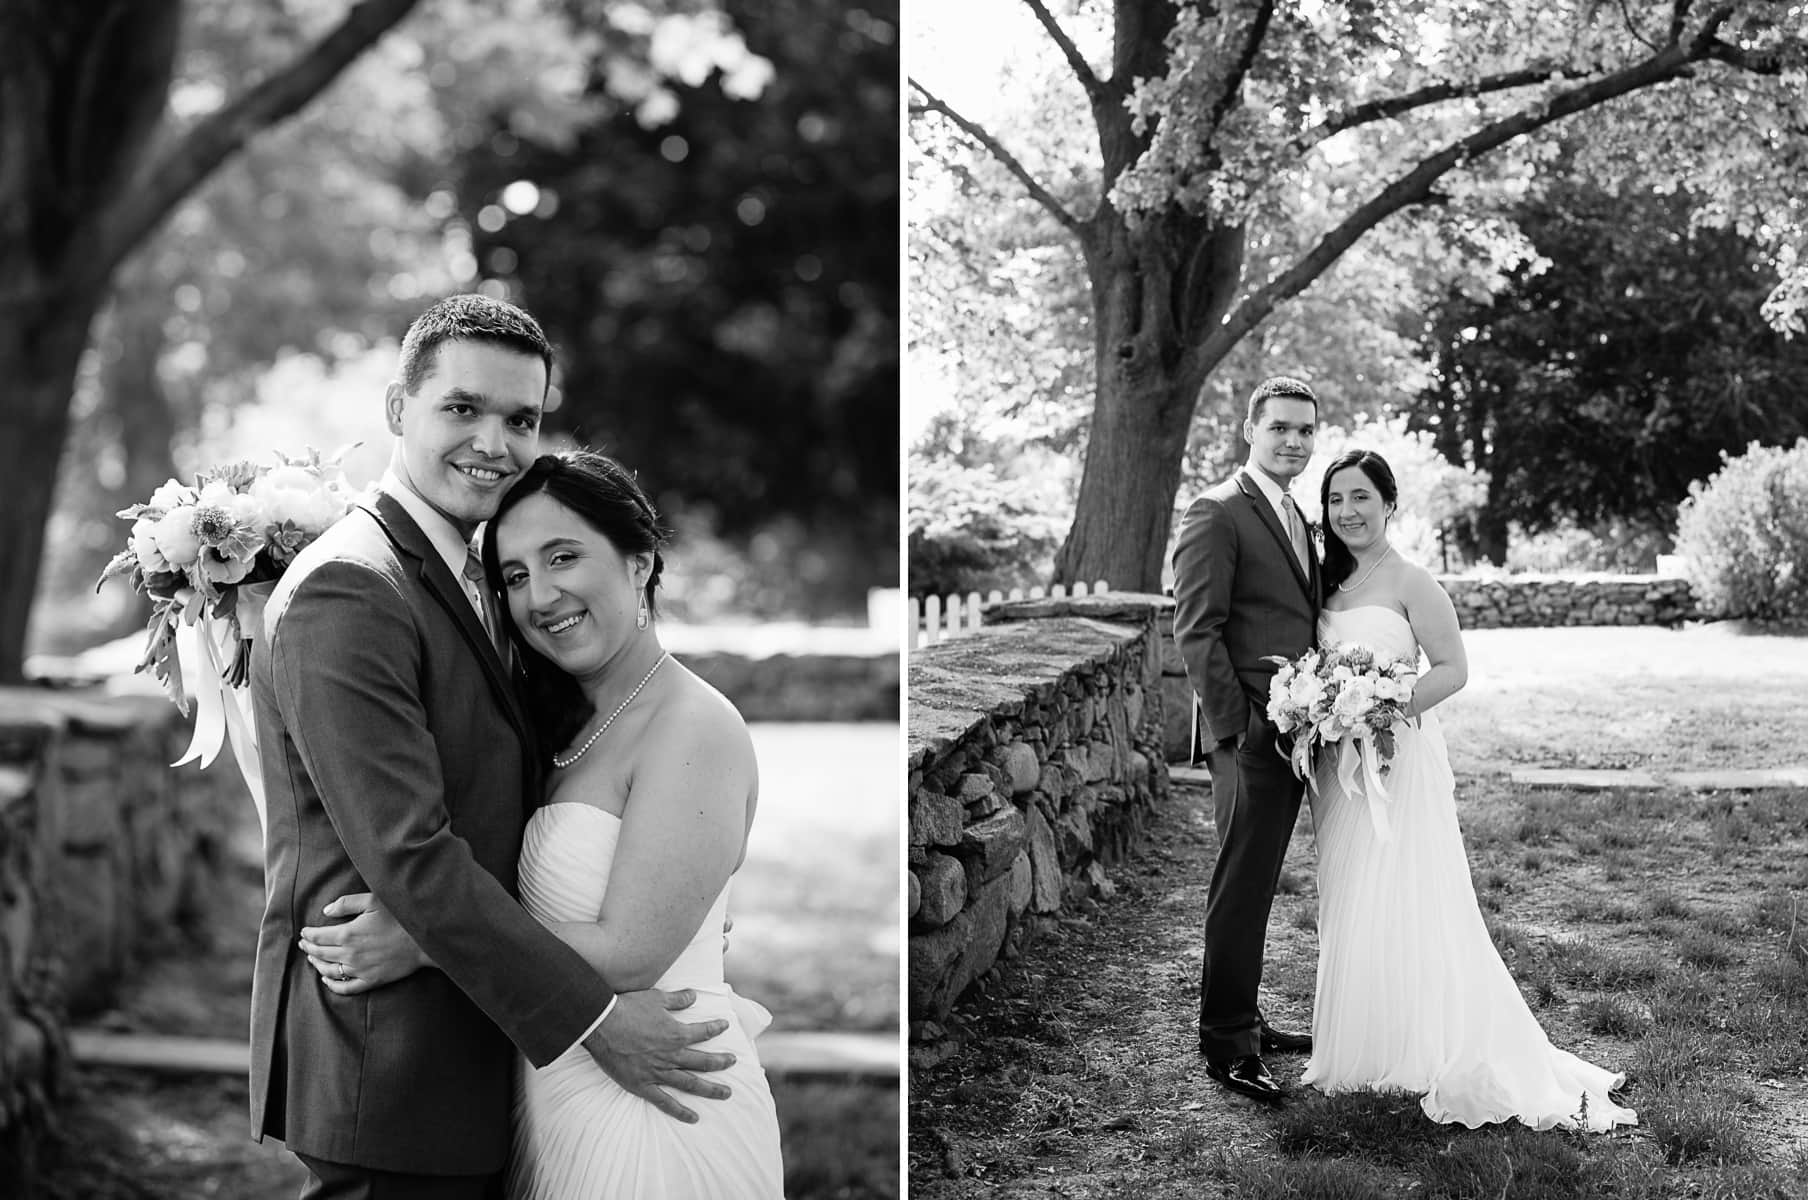 Mount Hope Farm wedding in Bristol RI | Kelly Benvenuto Photography | Boston Wedding Photographer